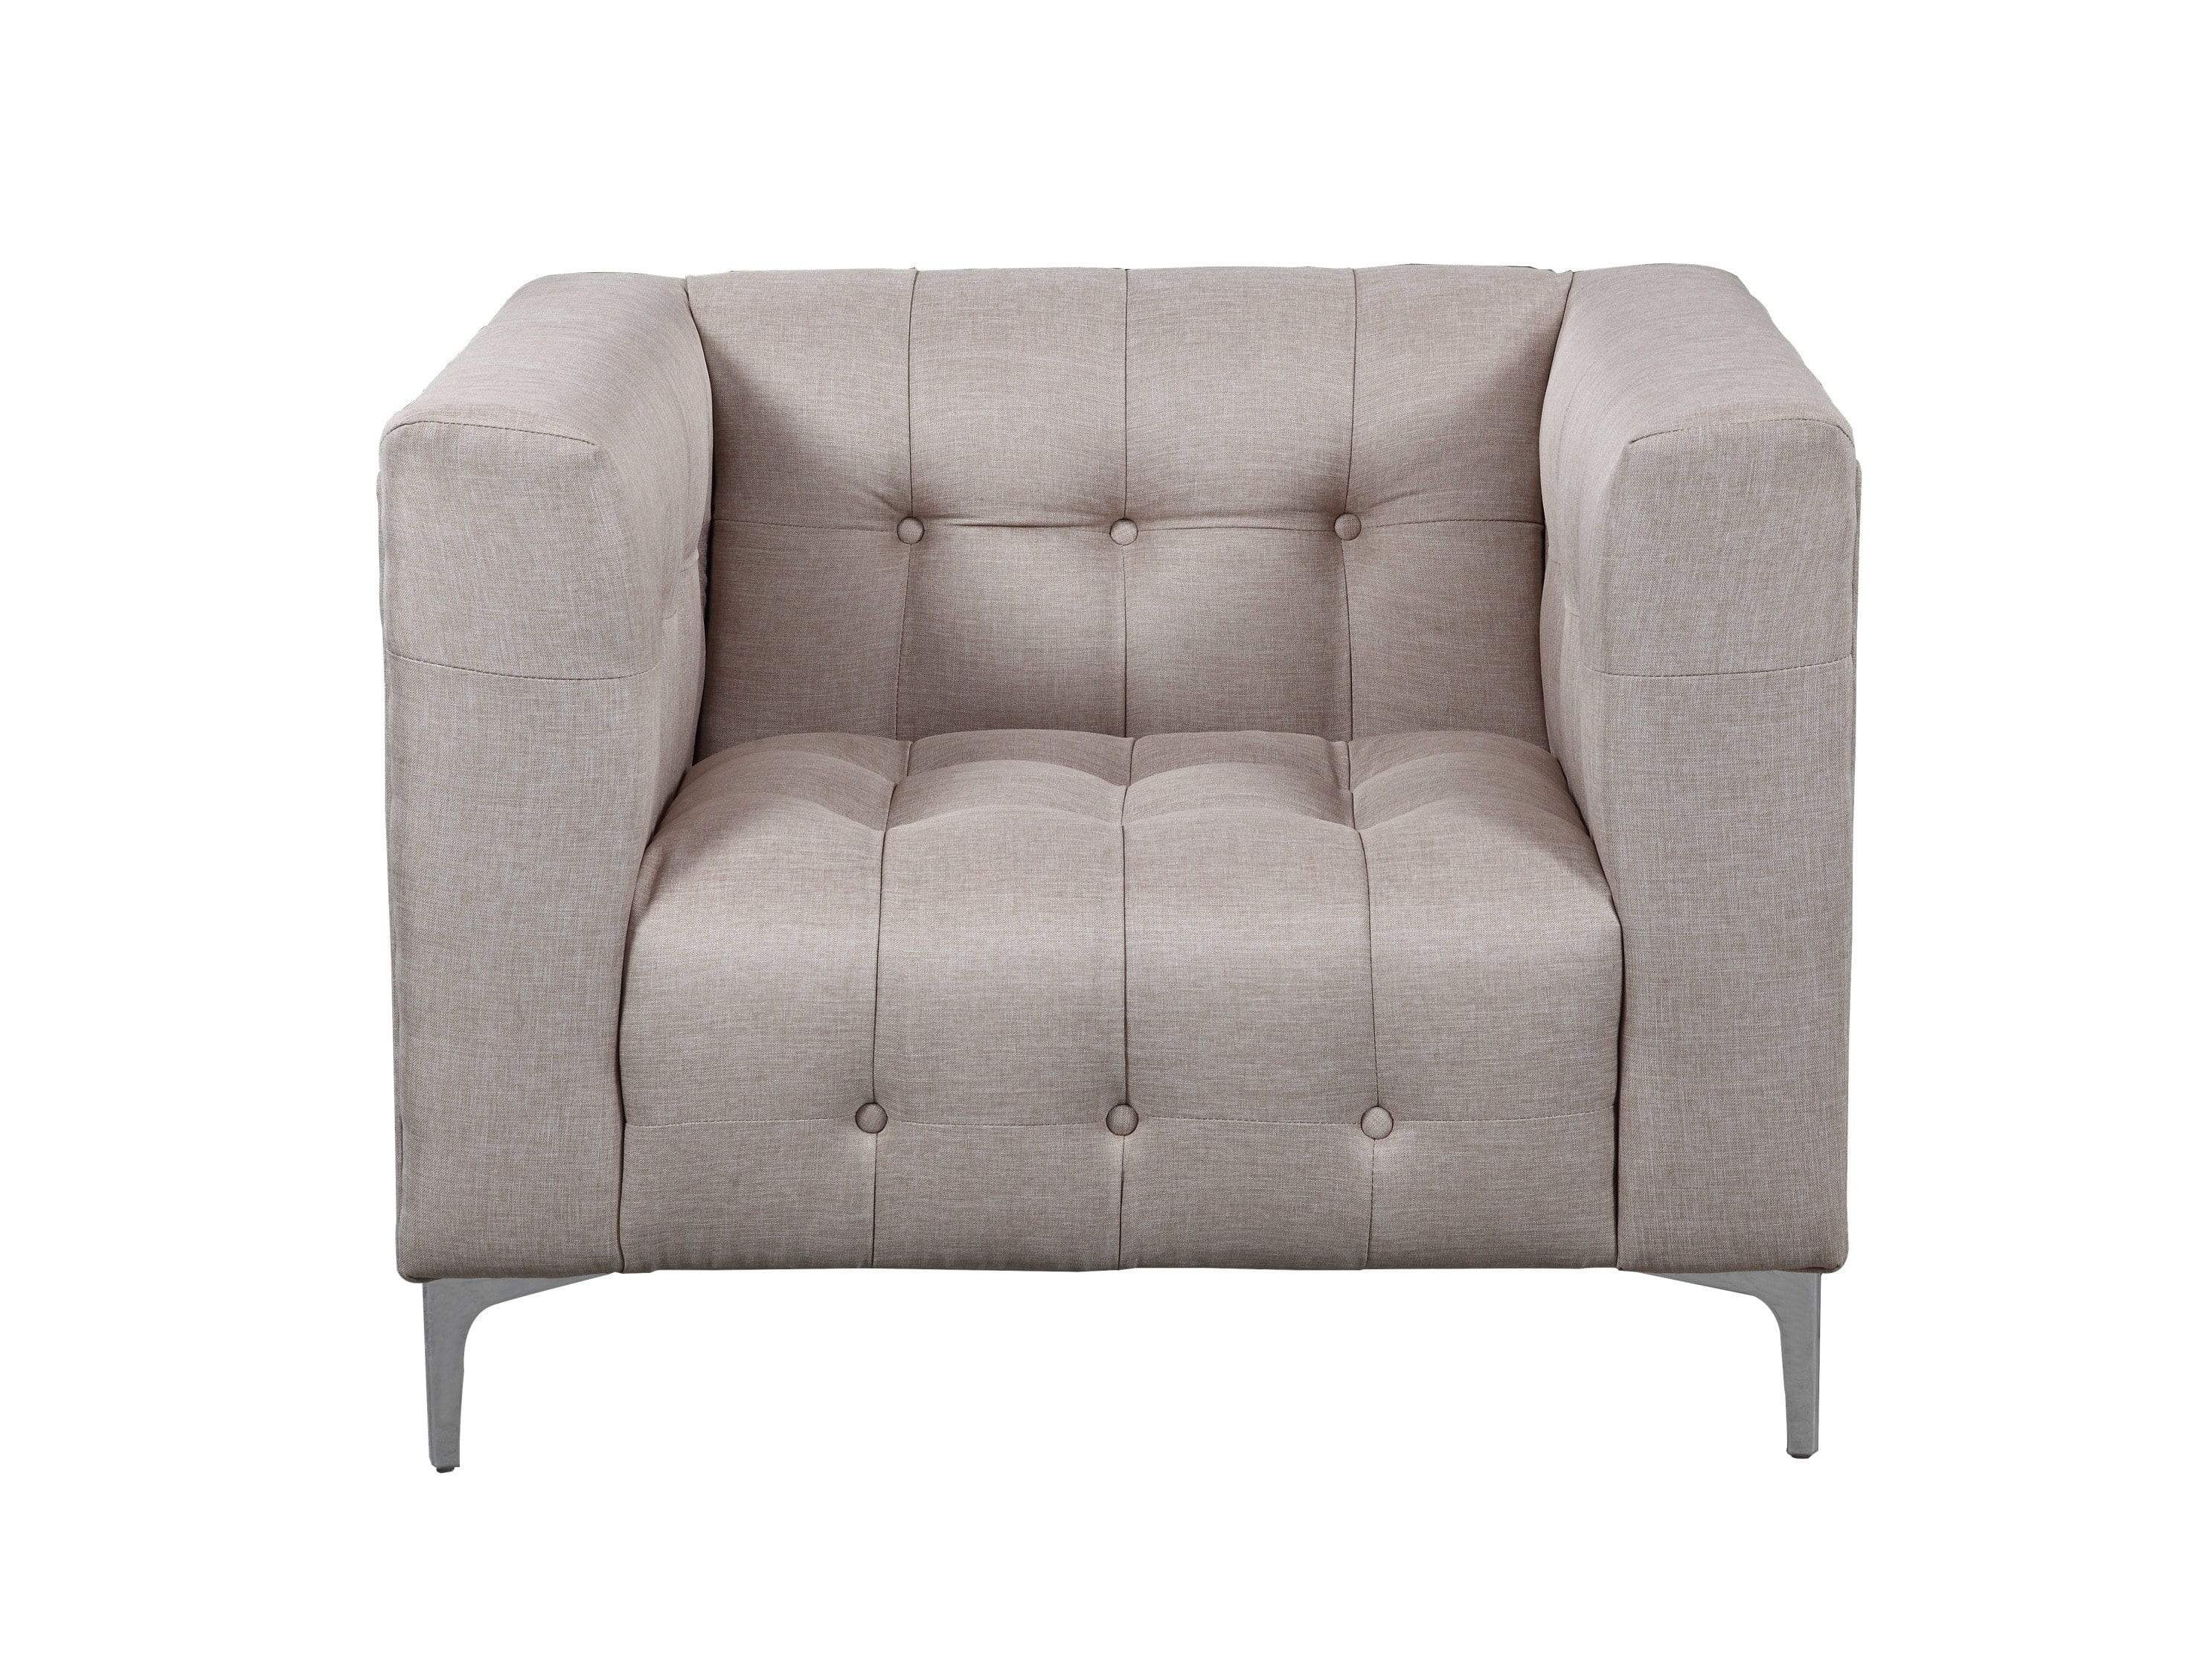 Gotti Tufted Linen Club Chair With Silver Legs